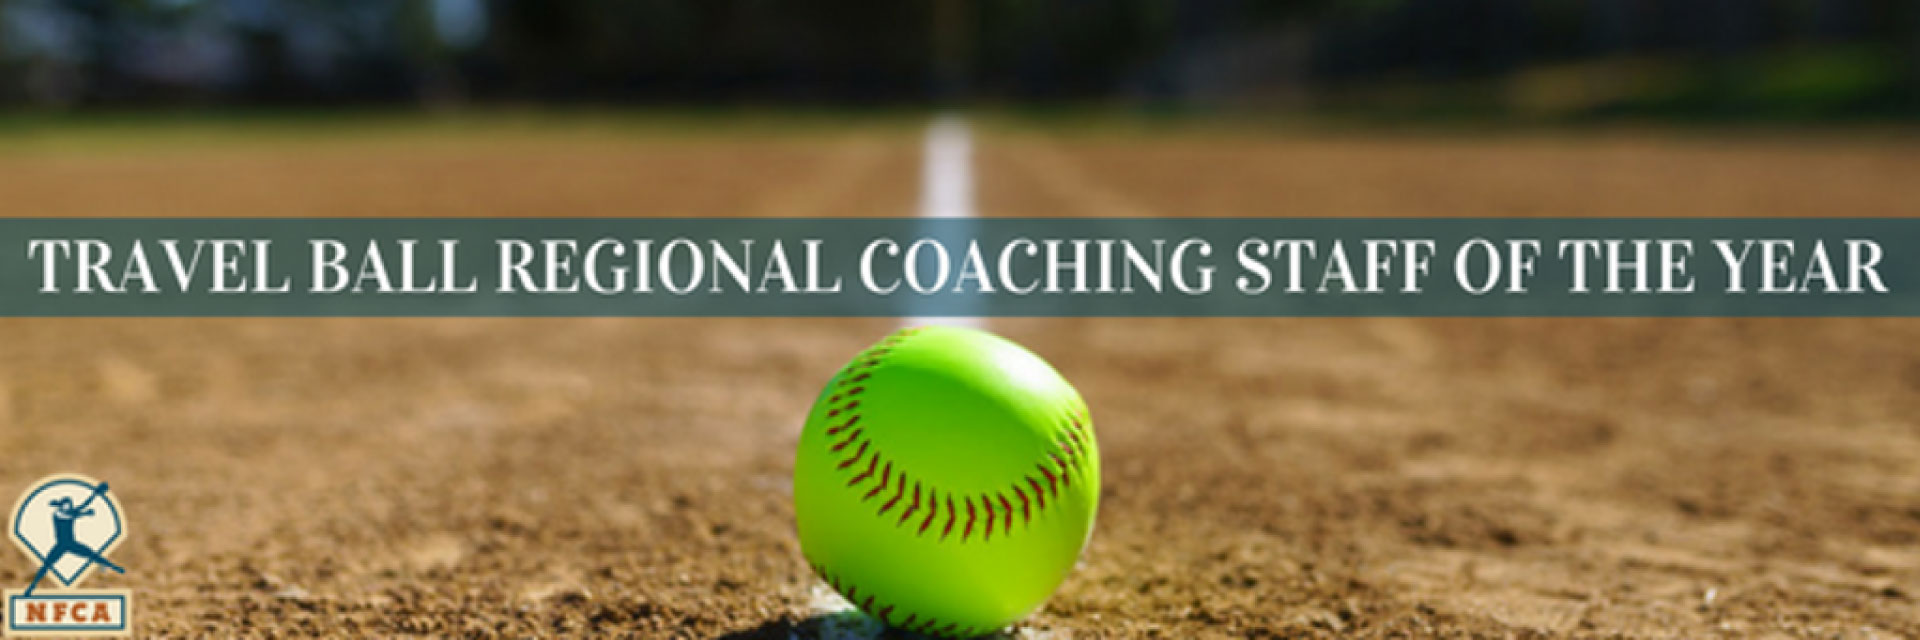 travel-ball-regional-coaching-staff-of-the-year-2019-iowa-premier